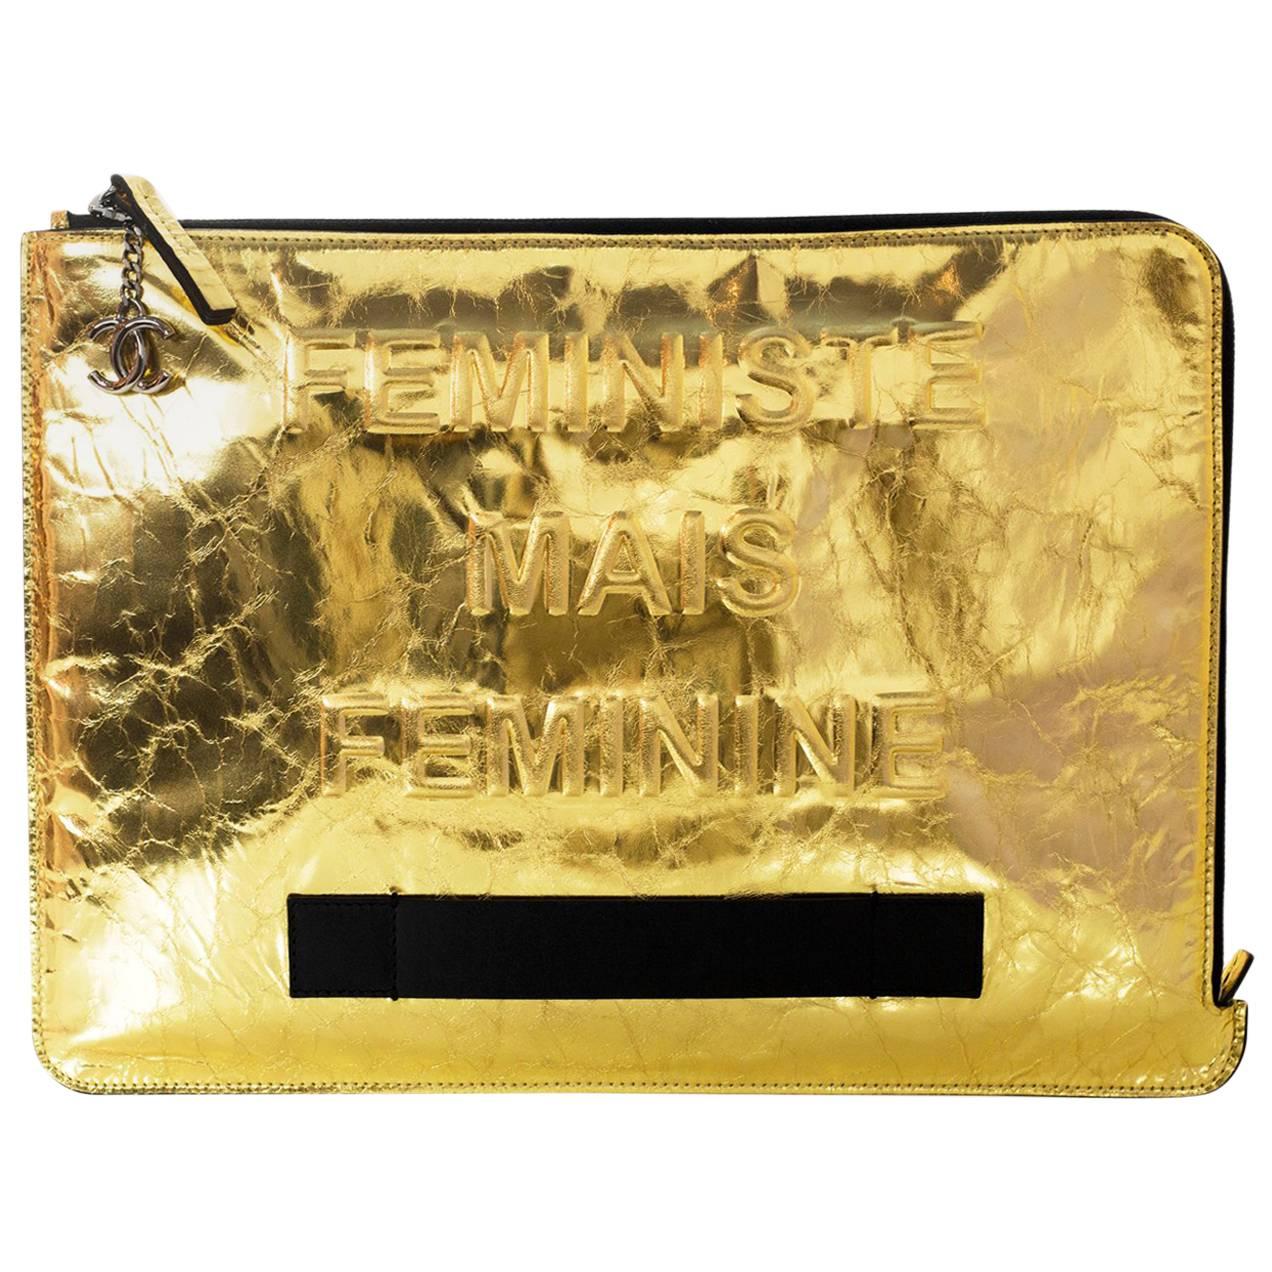 Chanel 2015 Gold Crinkled Leather Large Feminist Mais Feminine Clutch Bag